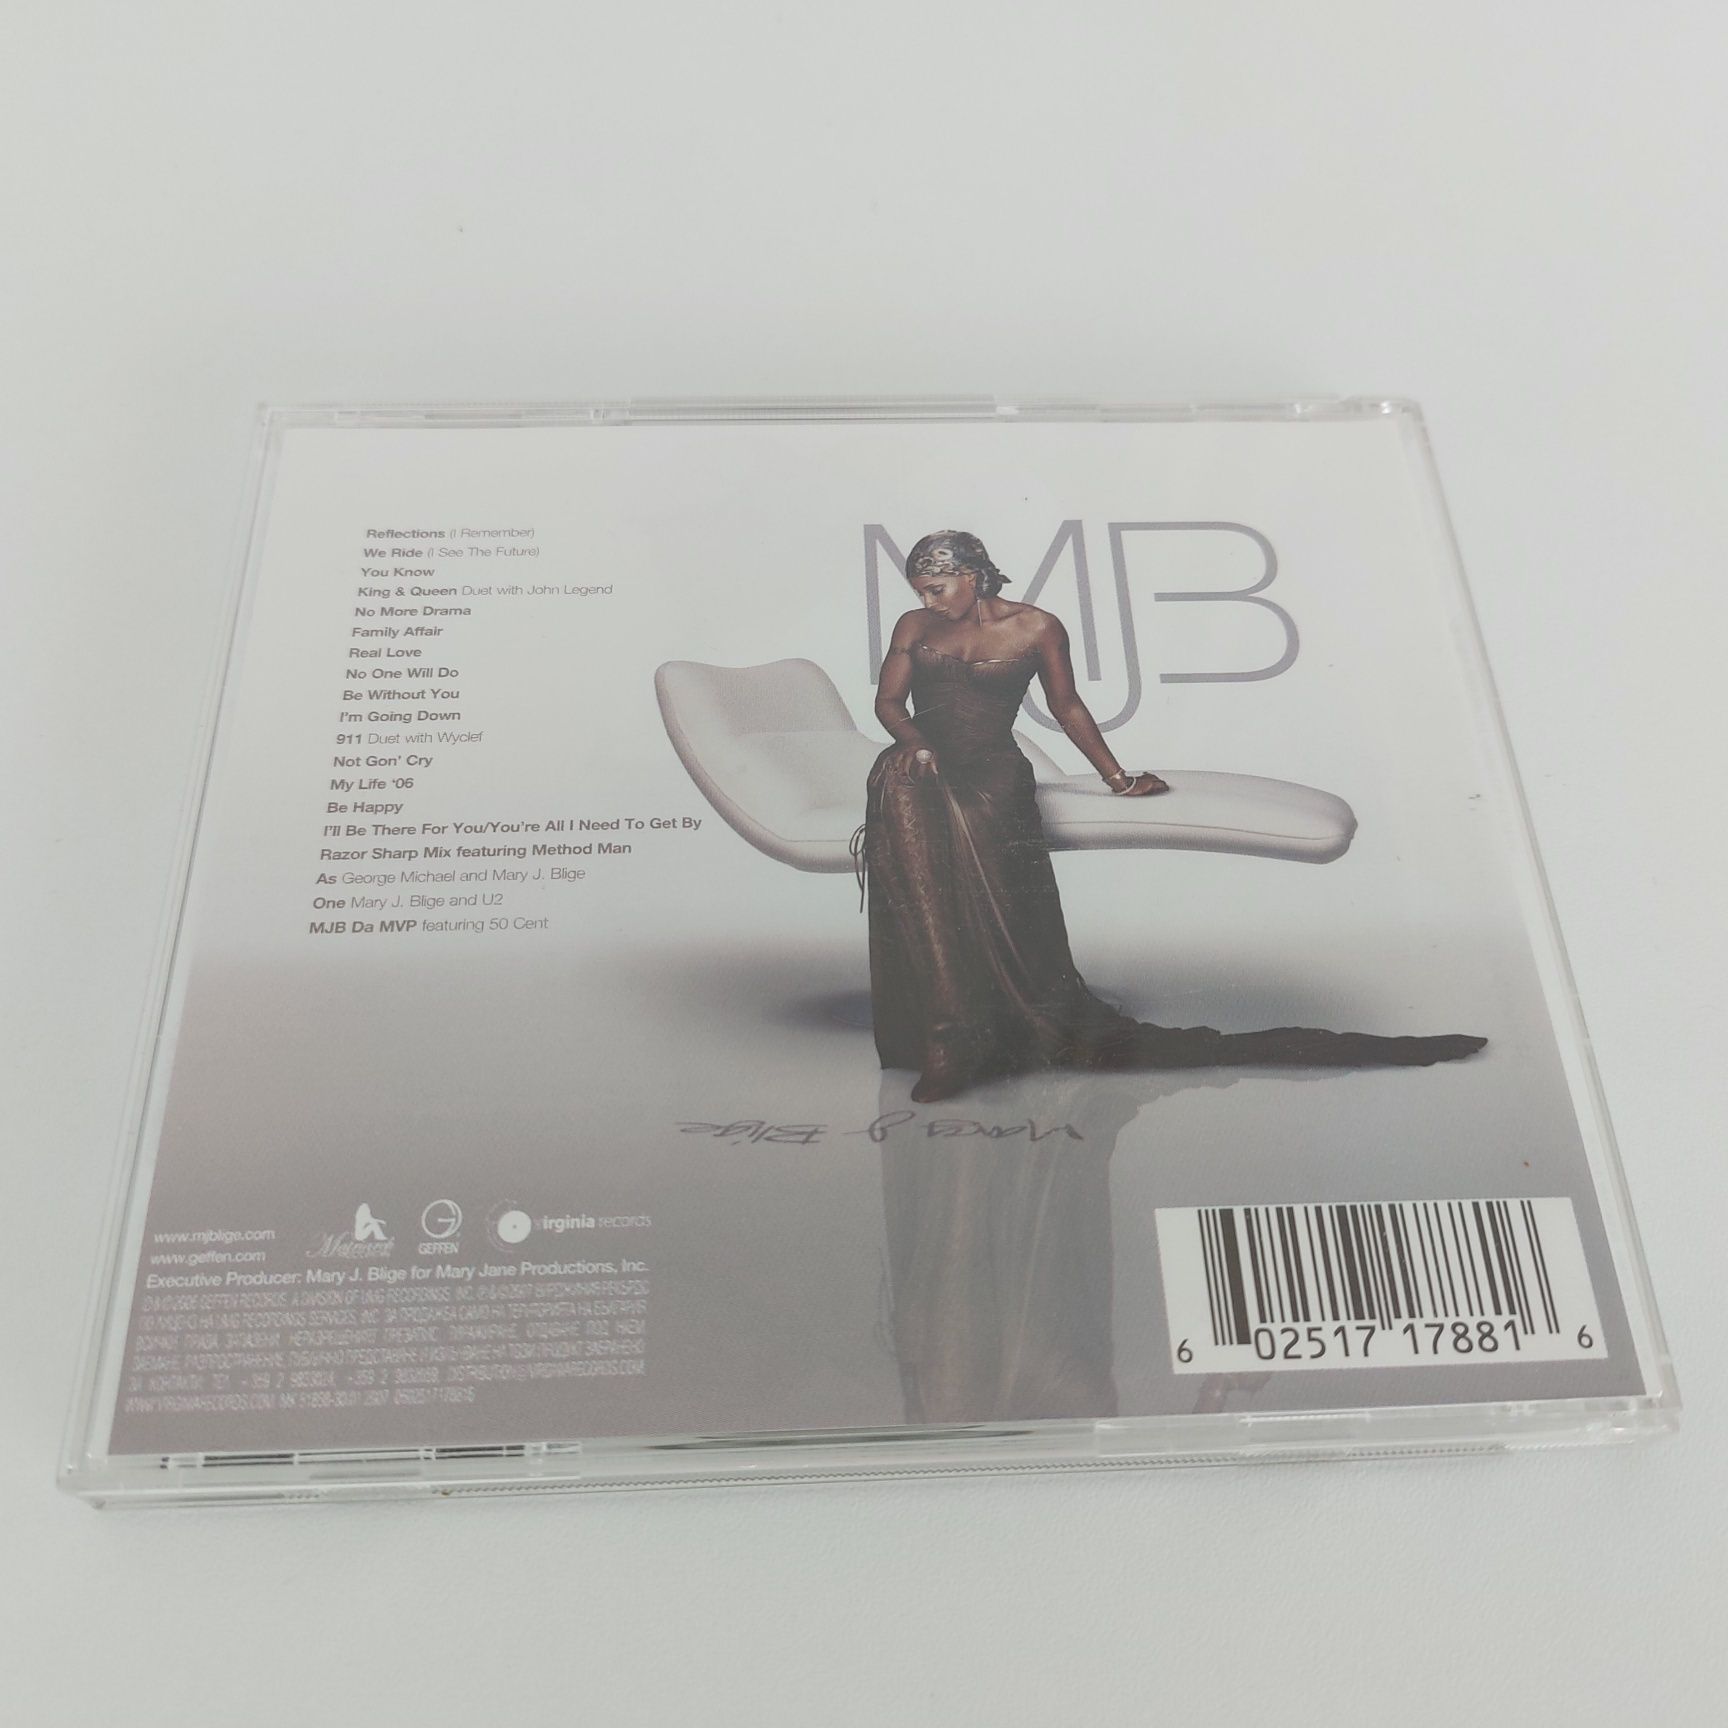 Promo: Mary J Blige - Reflections (A Retrospective) - Audio CD 
Като н